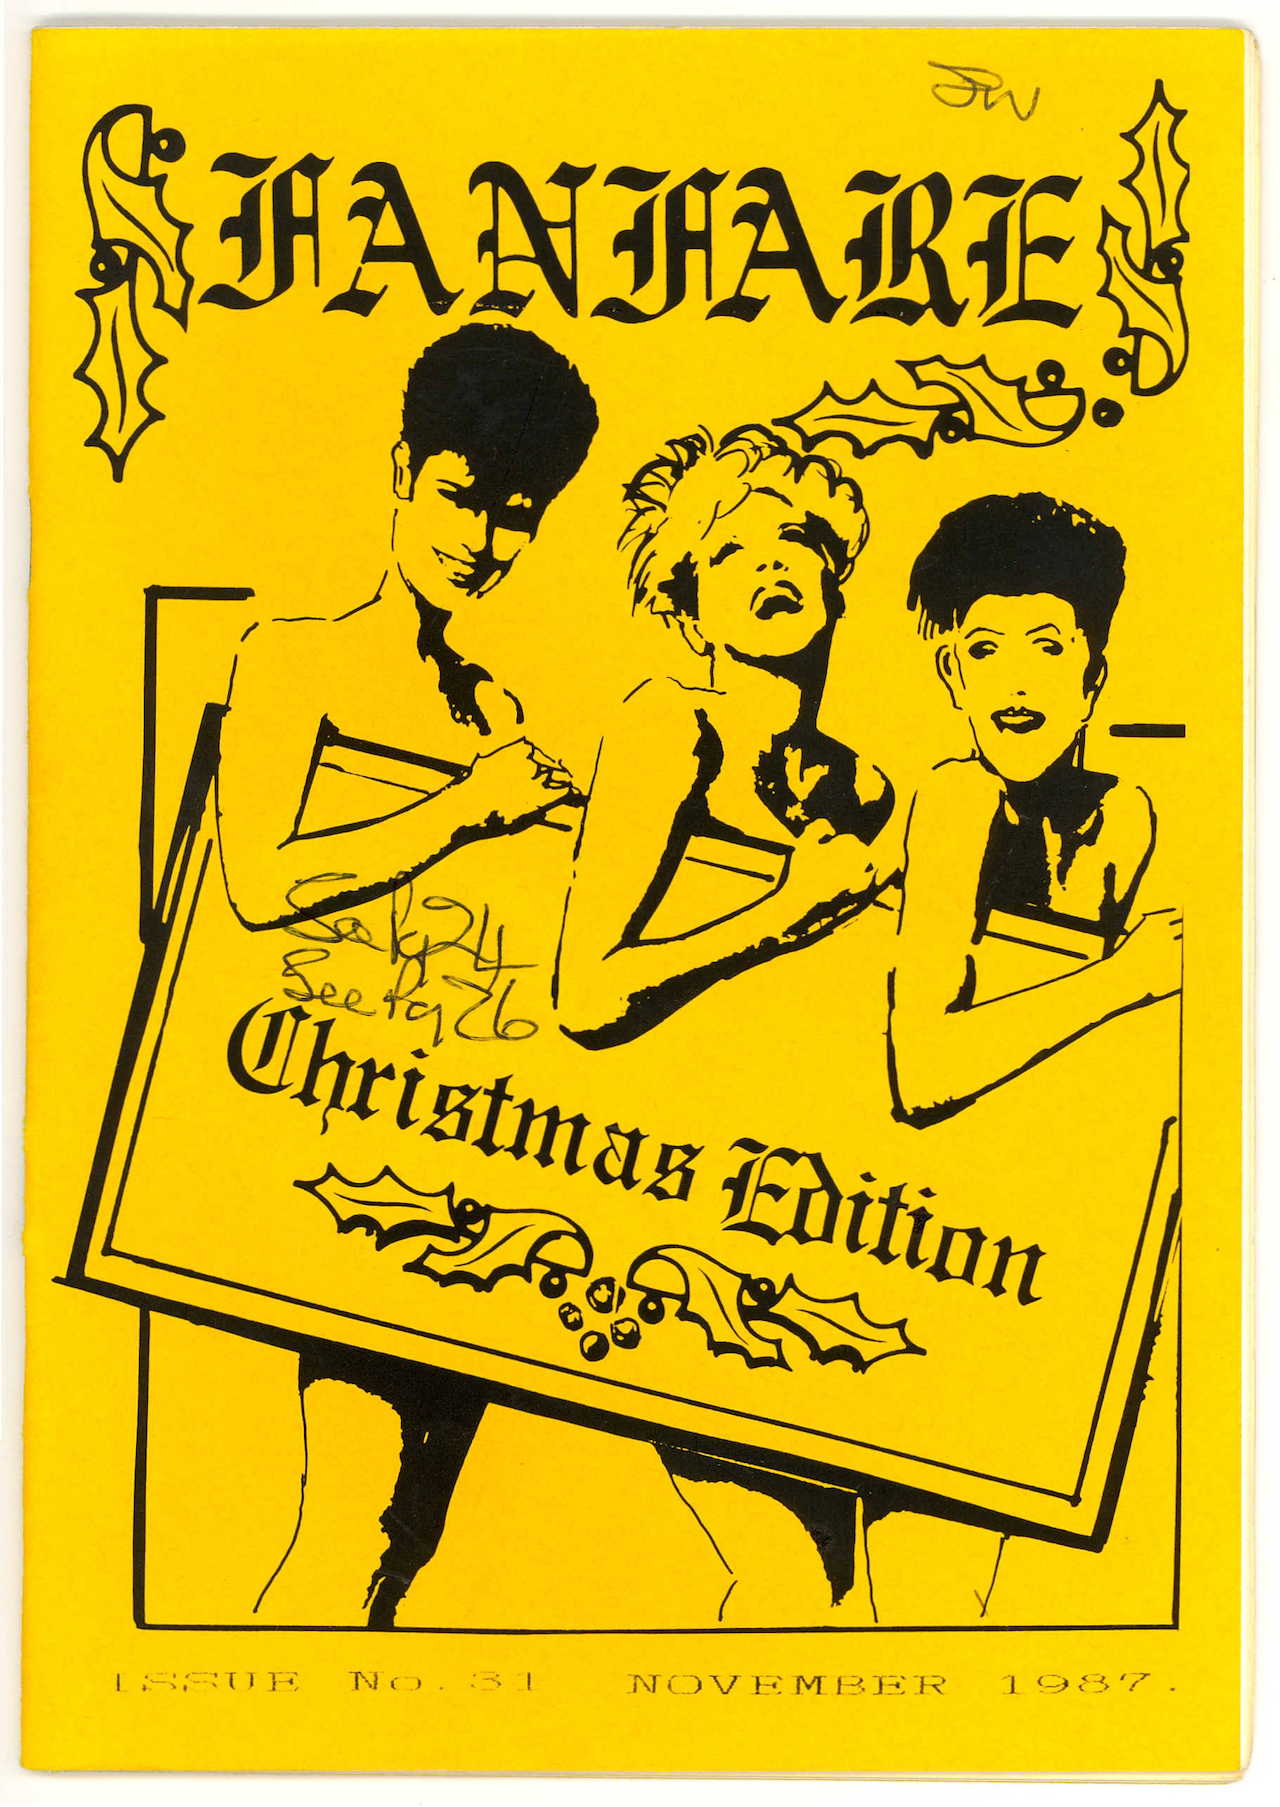 Cover of November 1987 issue of Fanfare Magazine (courtesy Gender DynamiX and Digital Transgender Archive)